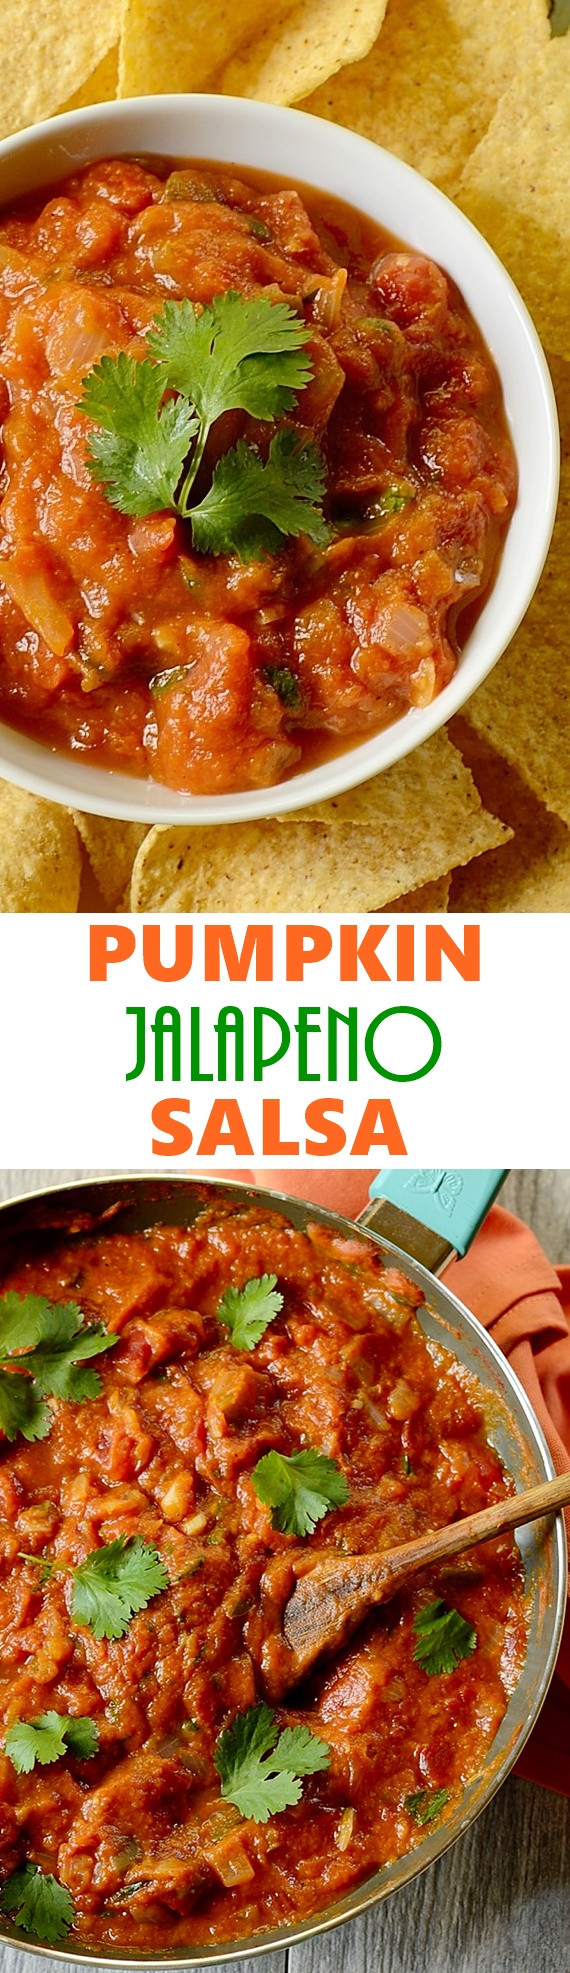 Pumpkin Salsa Recipe
 Pumpkin Jalapeno Salsa Recipe